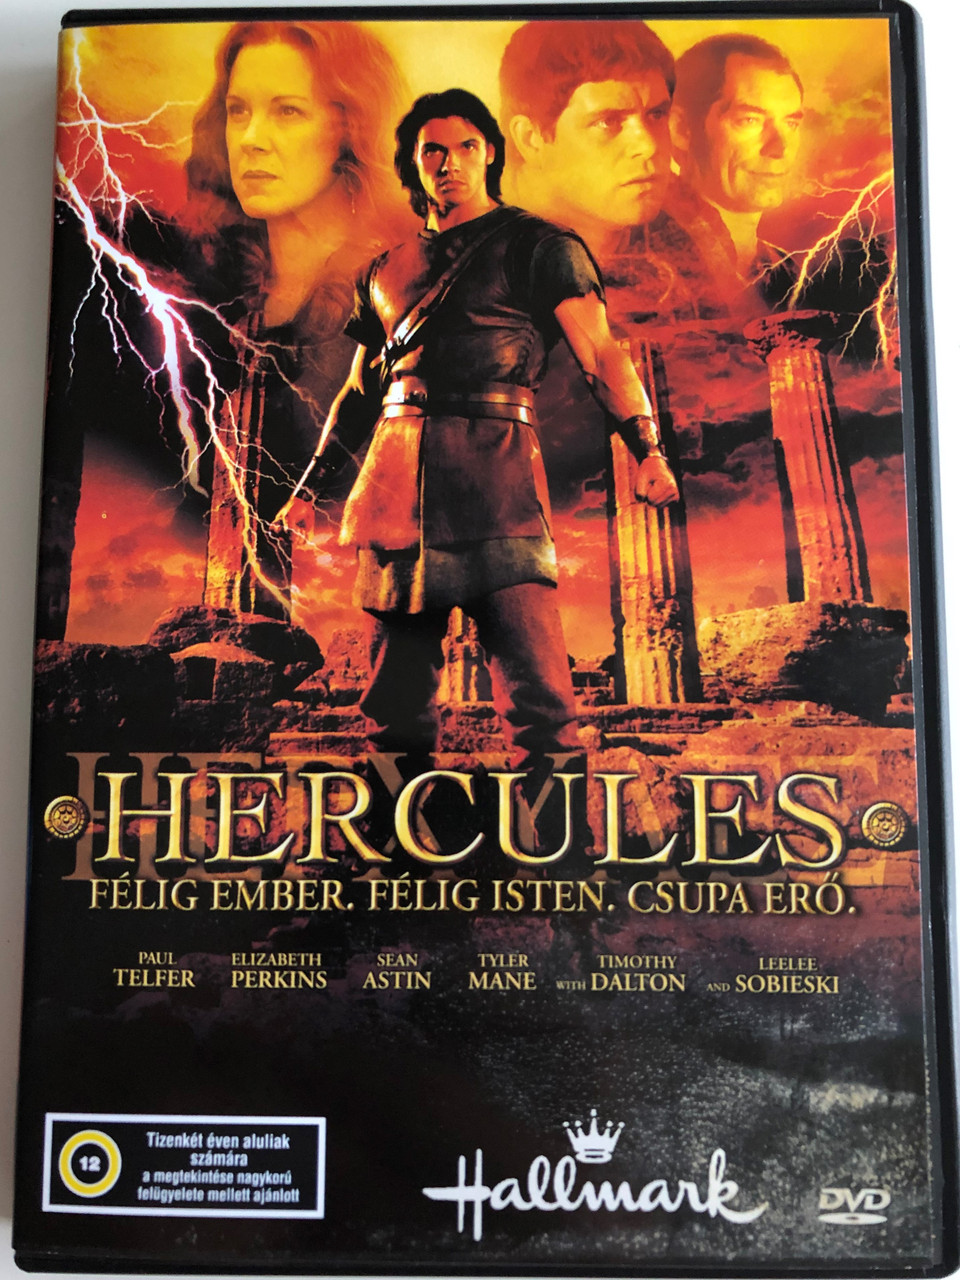 Hercules DVD 2005 / Directed by Roger Young / Starring: Paul Telfer,  Elizabeth Perkins, Sean Astin, Tyler Mane, Timothy Dalton -  bibleinmylanguage